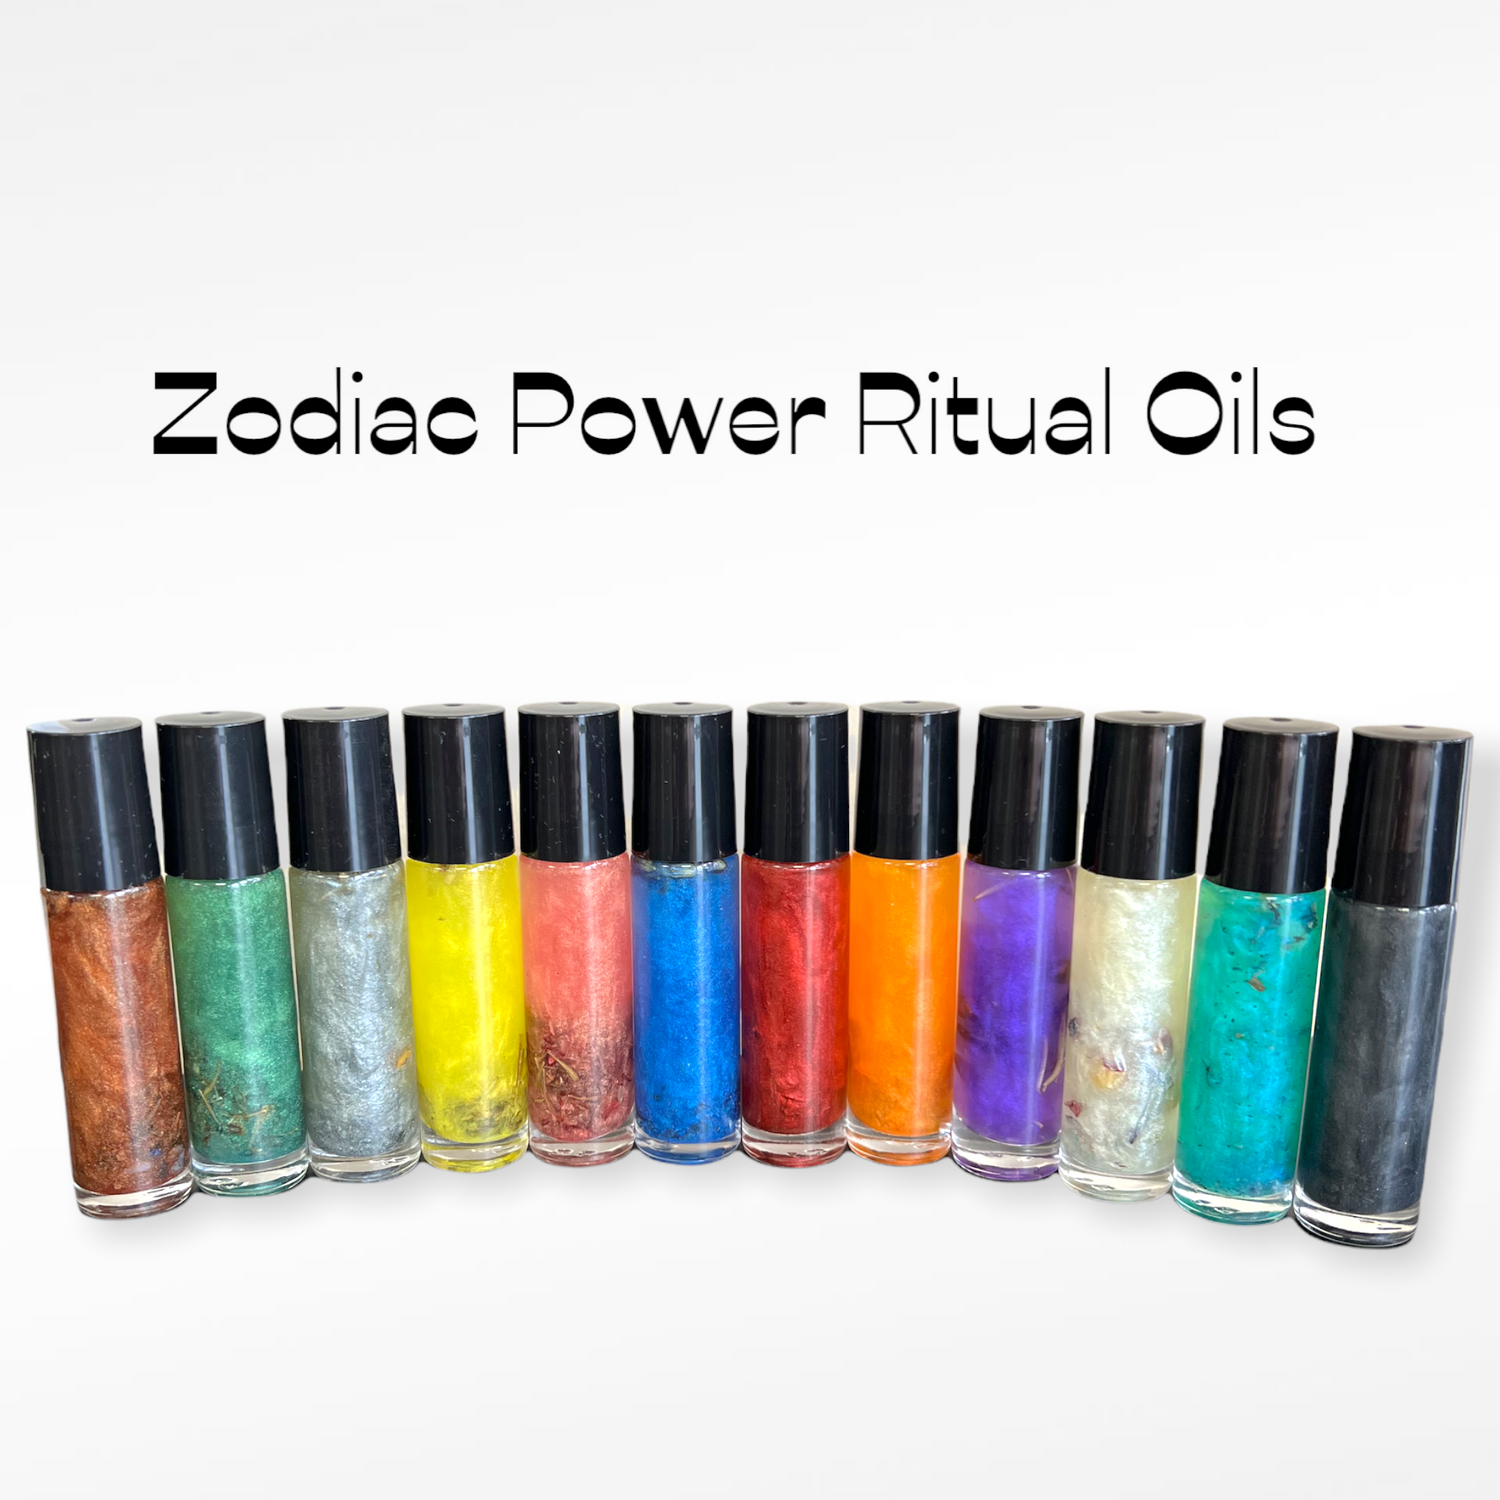 Zodiac Power Ritual Oils